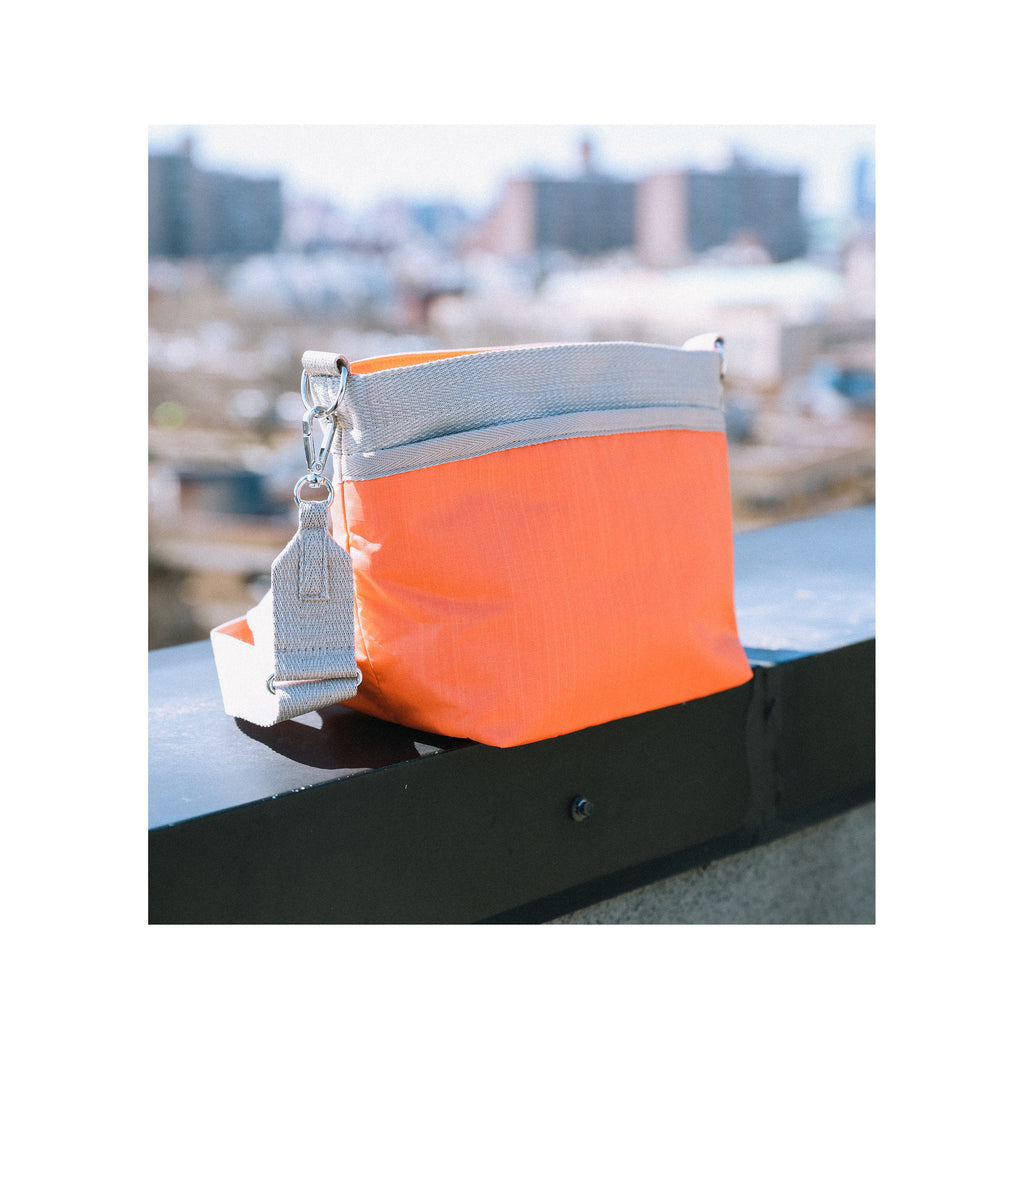 Lesportsac Small Bucket Bag - Tangerine/Latte